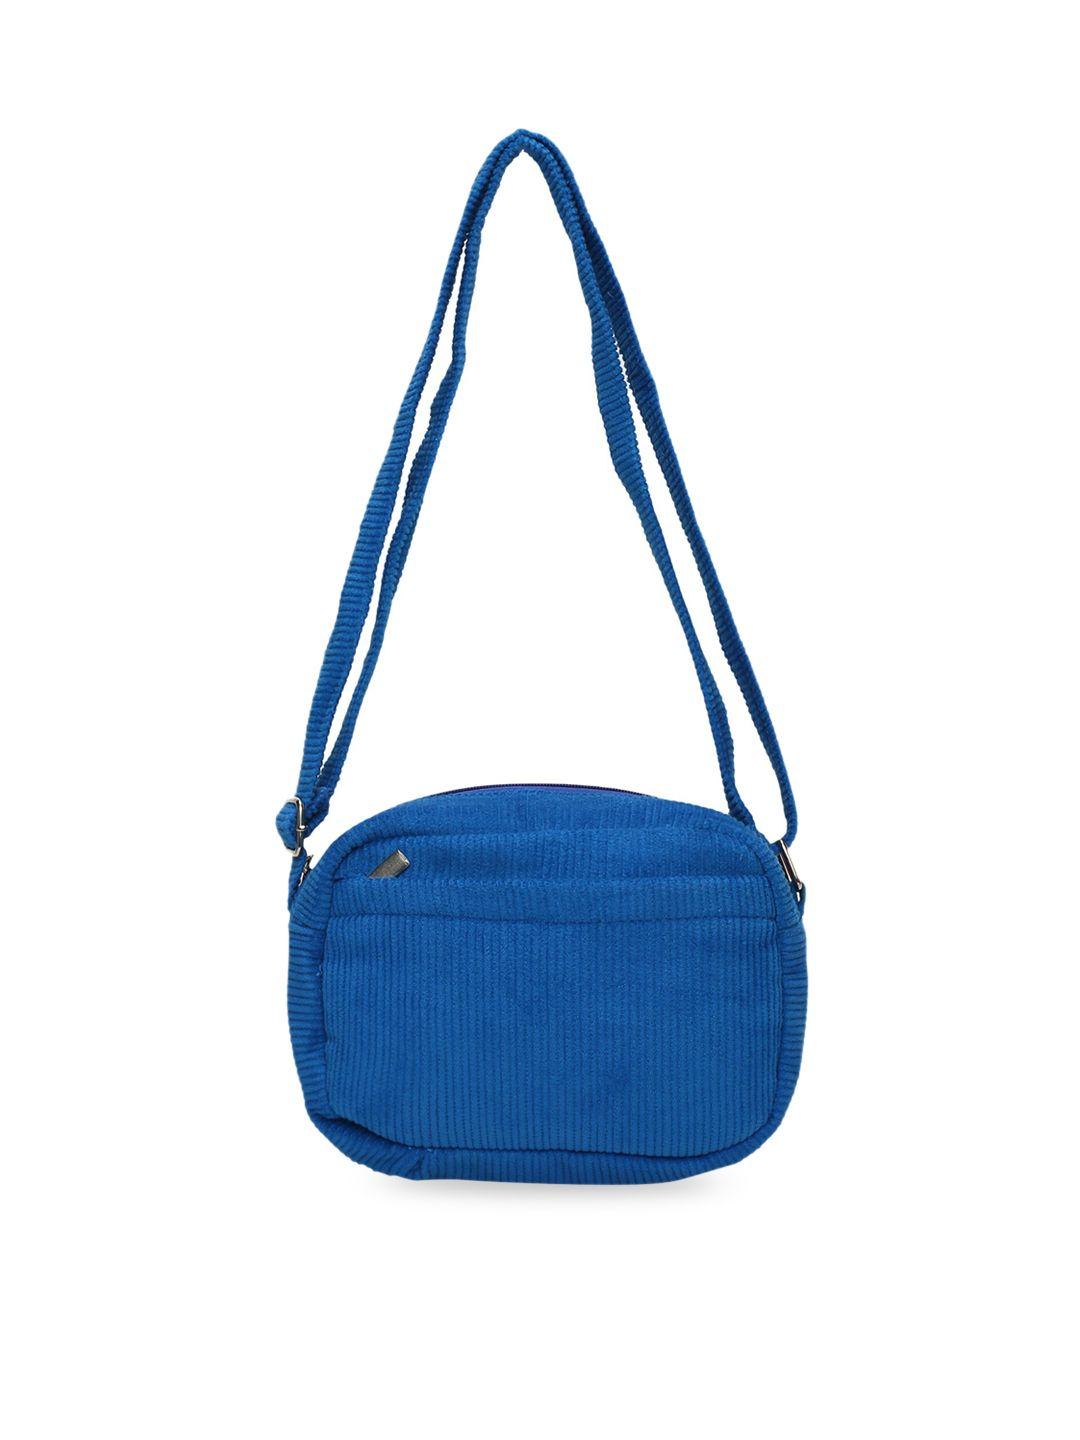 max blue bowling cotton sling bag